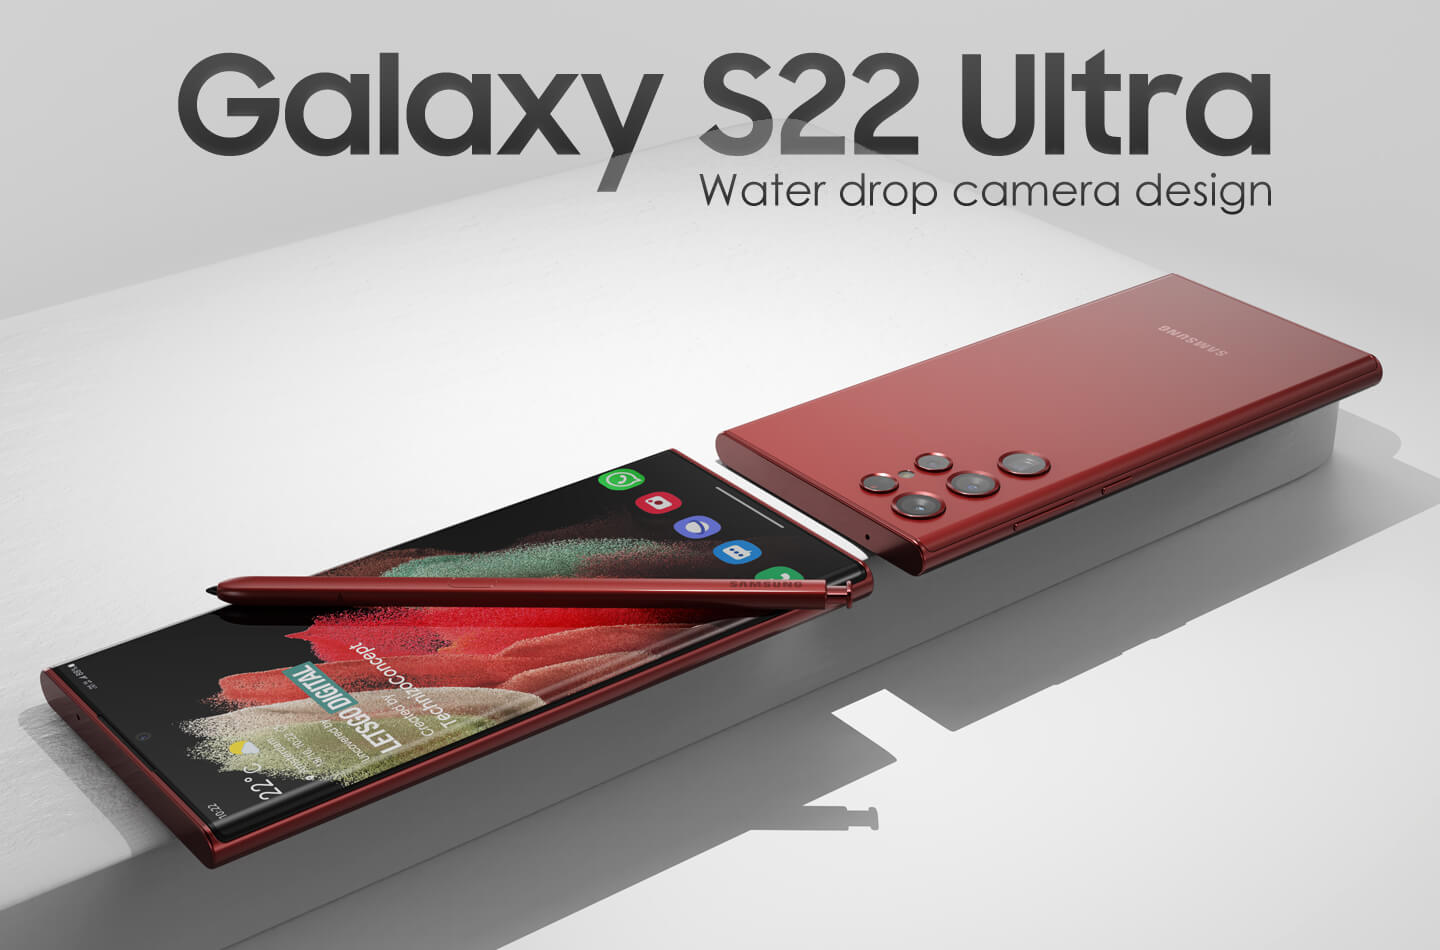 samsung-galaxy-s22-ultra-with-water-drop-camera-design